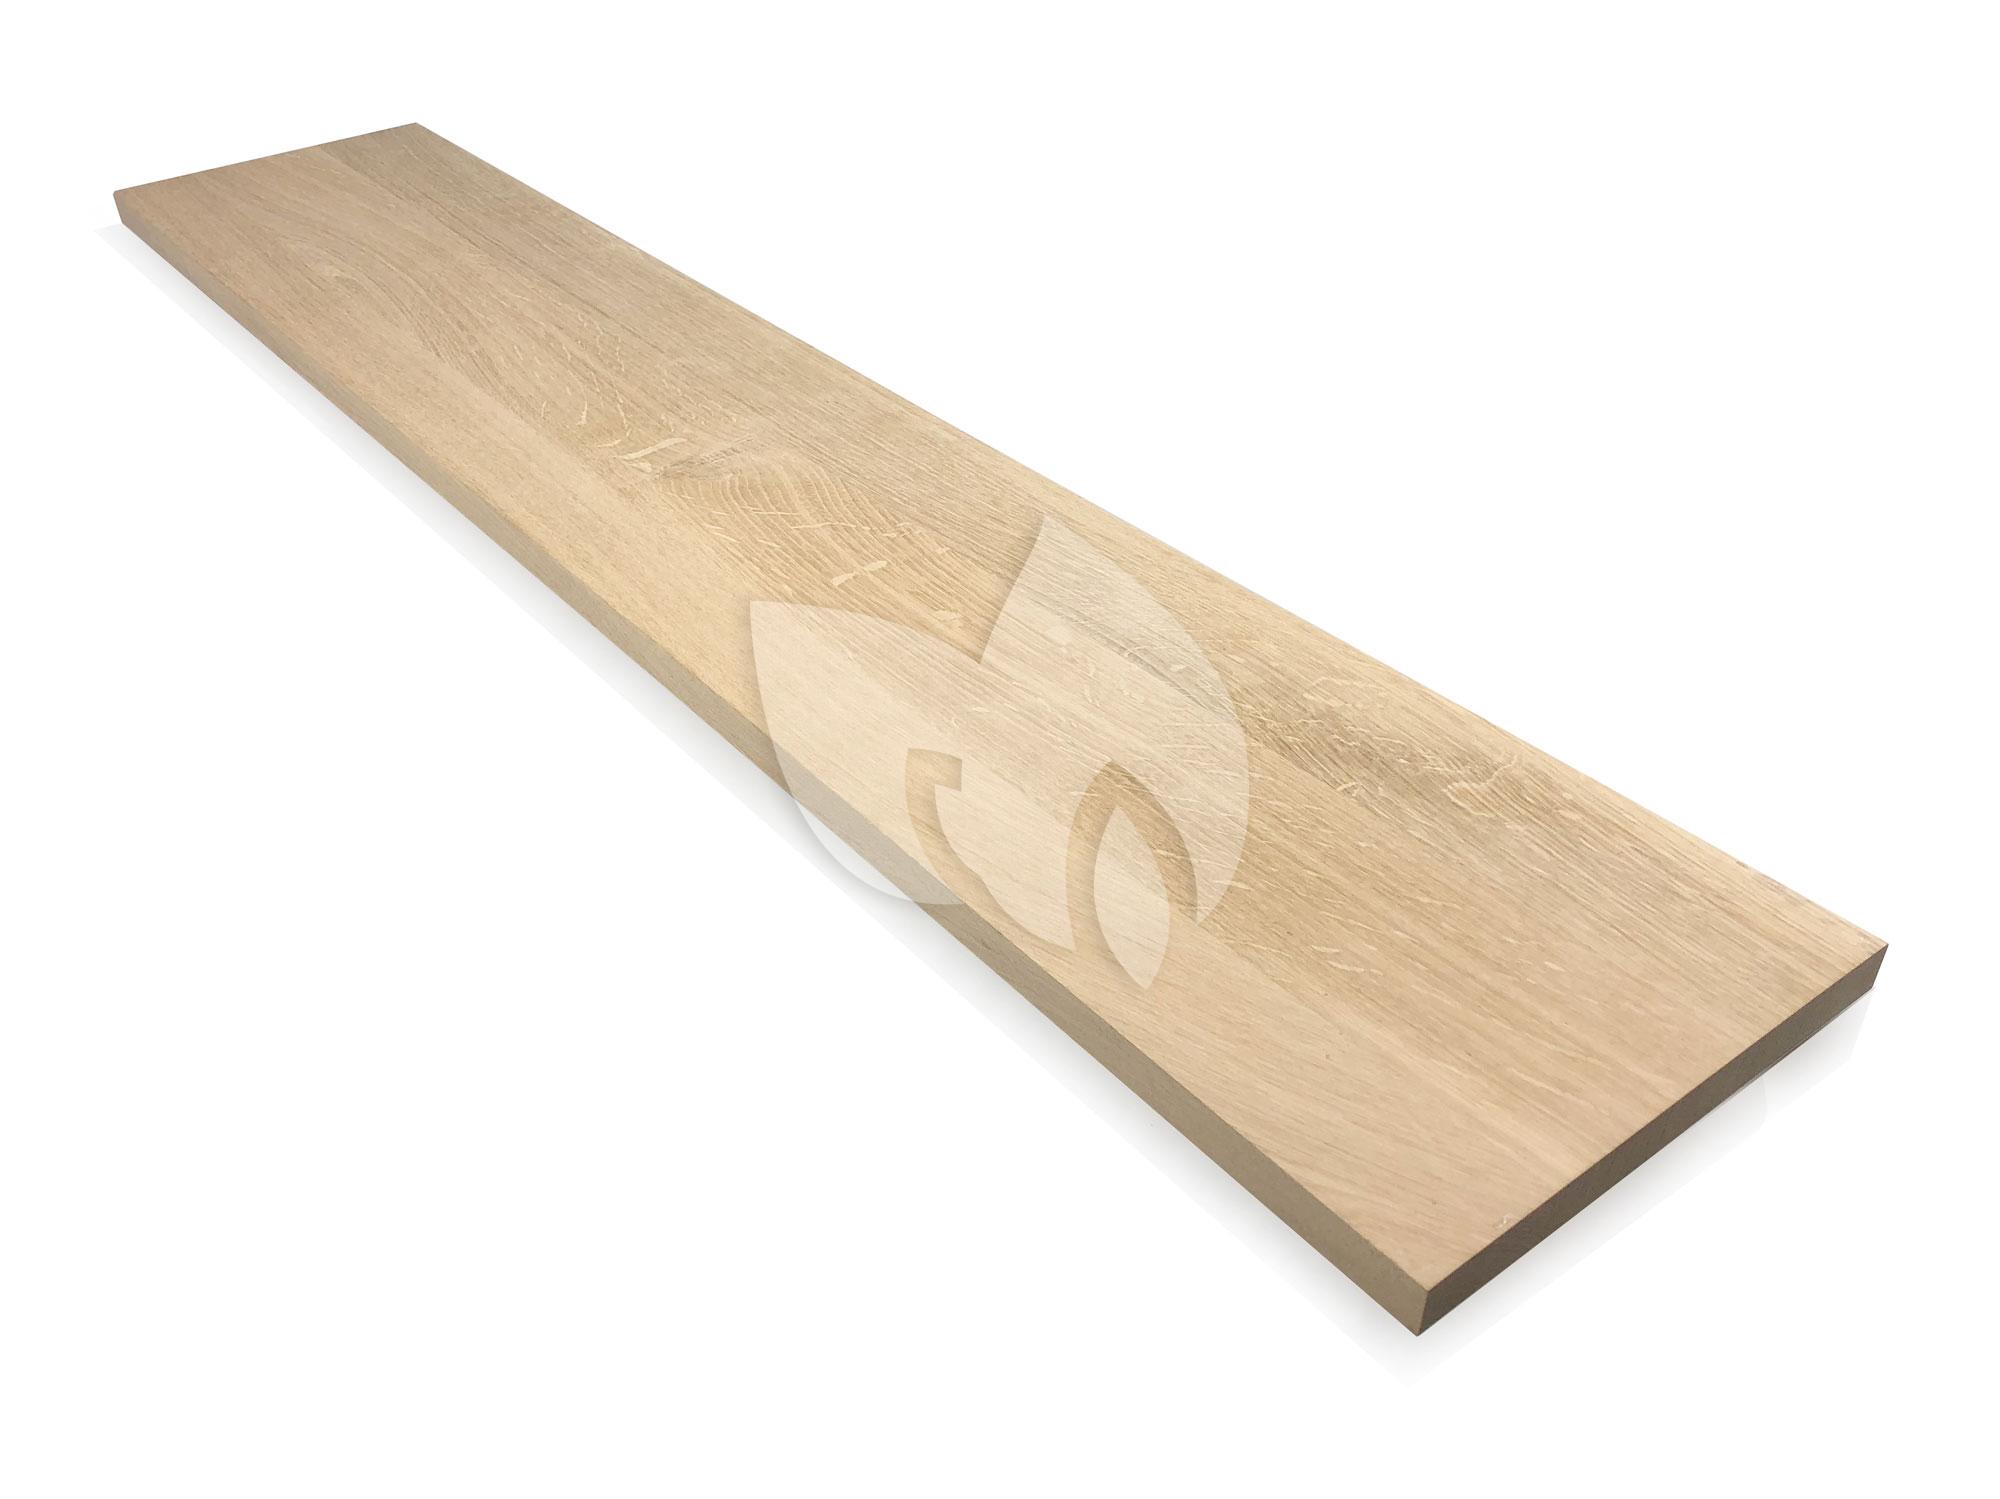 Misbruik gelijktijdig Malawi Wood Brothers Eiken plank 150 x 30 cm - 18 mm | Tuinexpress.nl